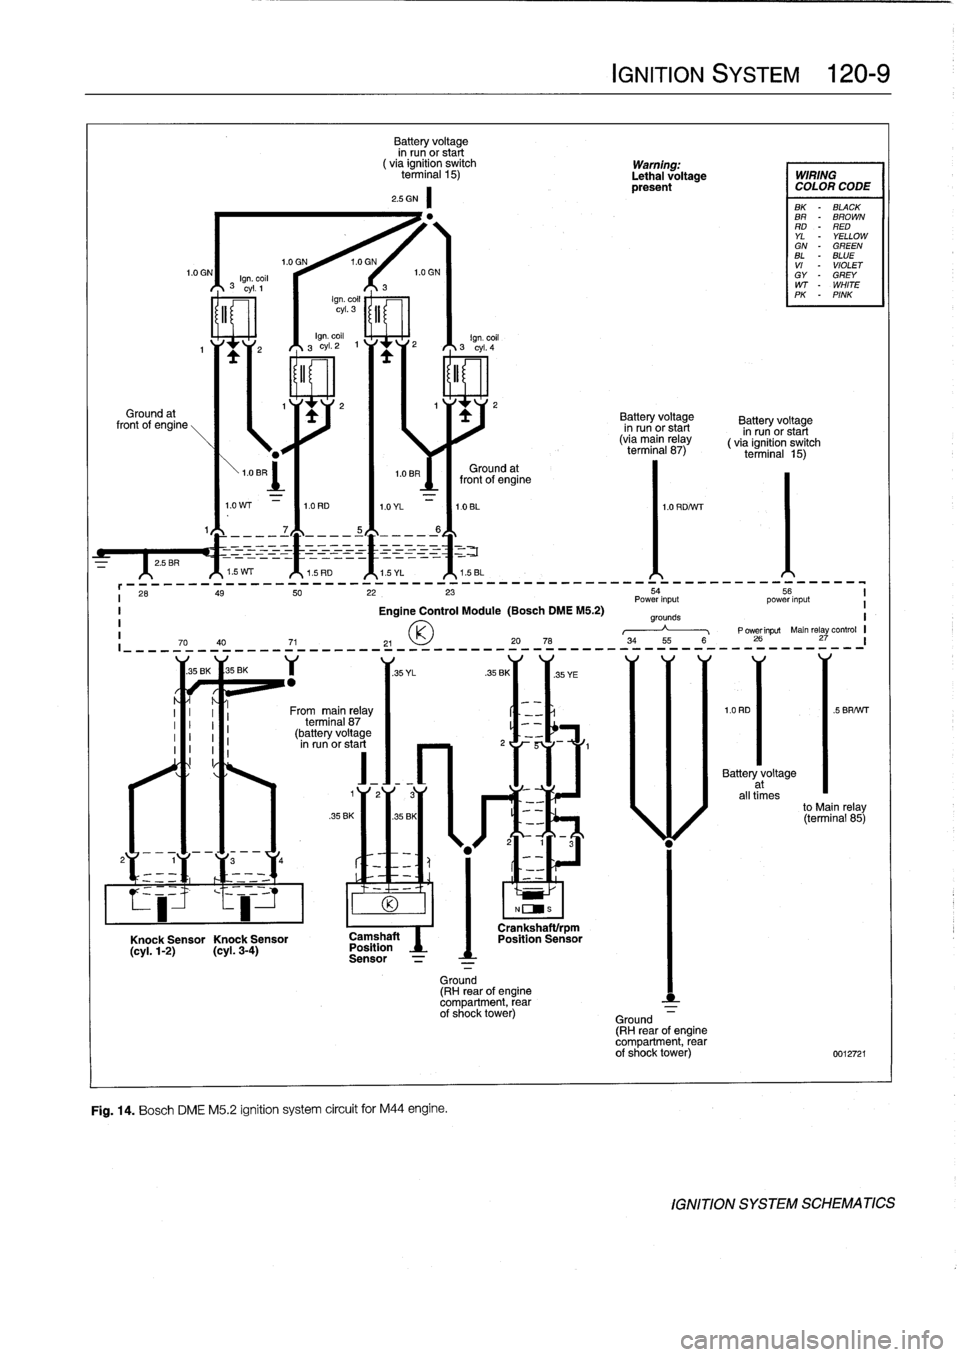 BMW 323i 1995 E36 Service Manual 
^1
.5WT
^1
.5RD
^1
.5YL
^1
.5BL
r

	

--__

	

____-

	

__-_

	

___-_

	

-___-_____--__--

	

-____-___

	

____-
i
26
g
5022
23

	

54

	

5

I

	

Power
input

	

power
input
I

	

Engine
Contro